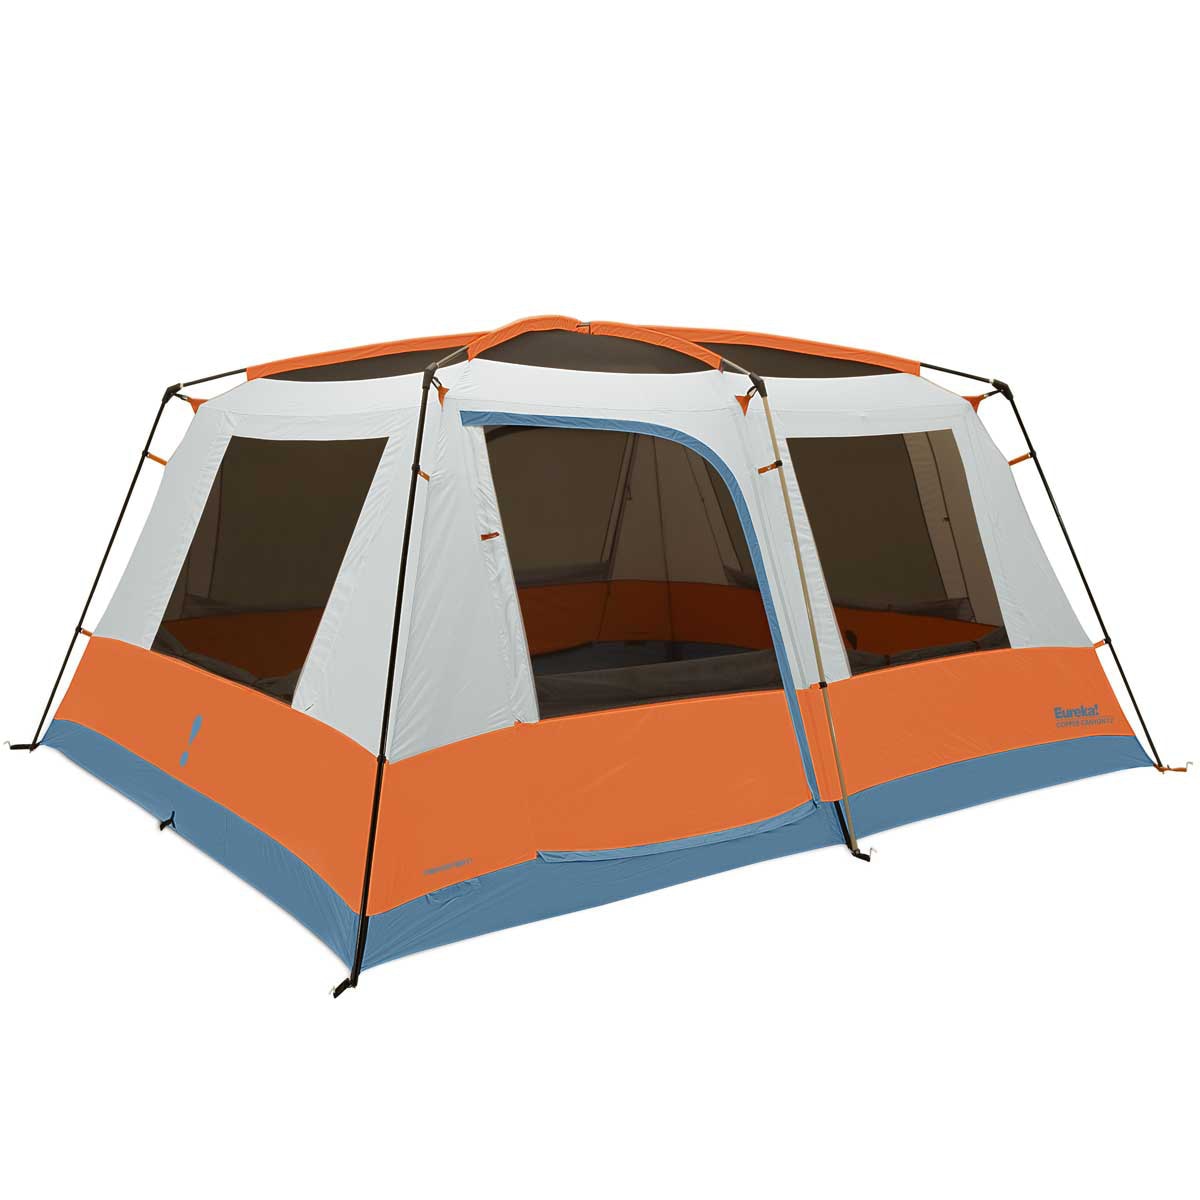 Copper Canyon LX 12 Person Tent